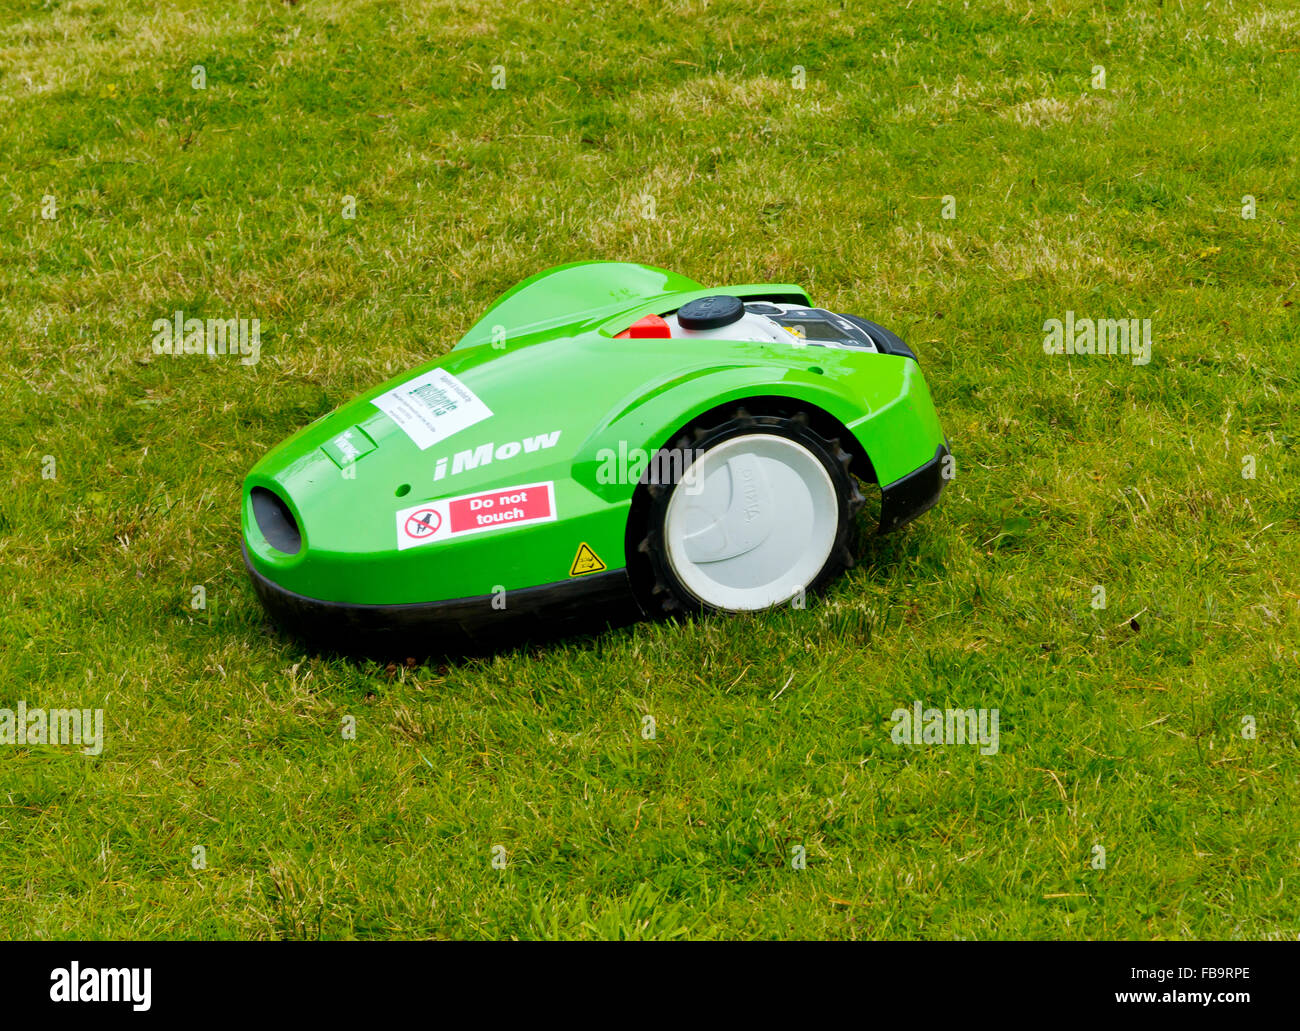 Viking Imow battery powered robotic lawn mower cutting grass using modern technology Stock Photo